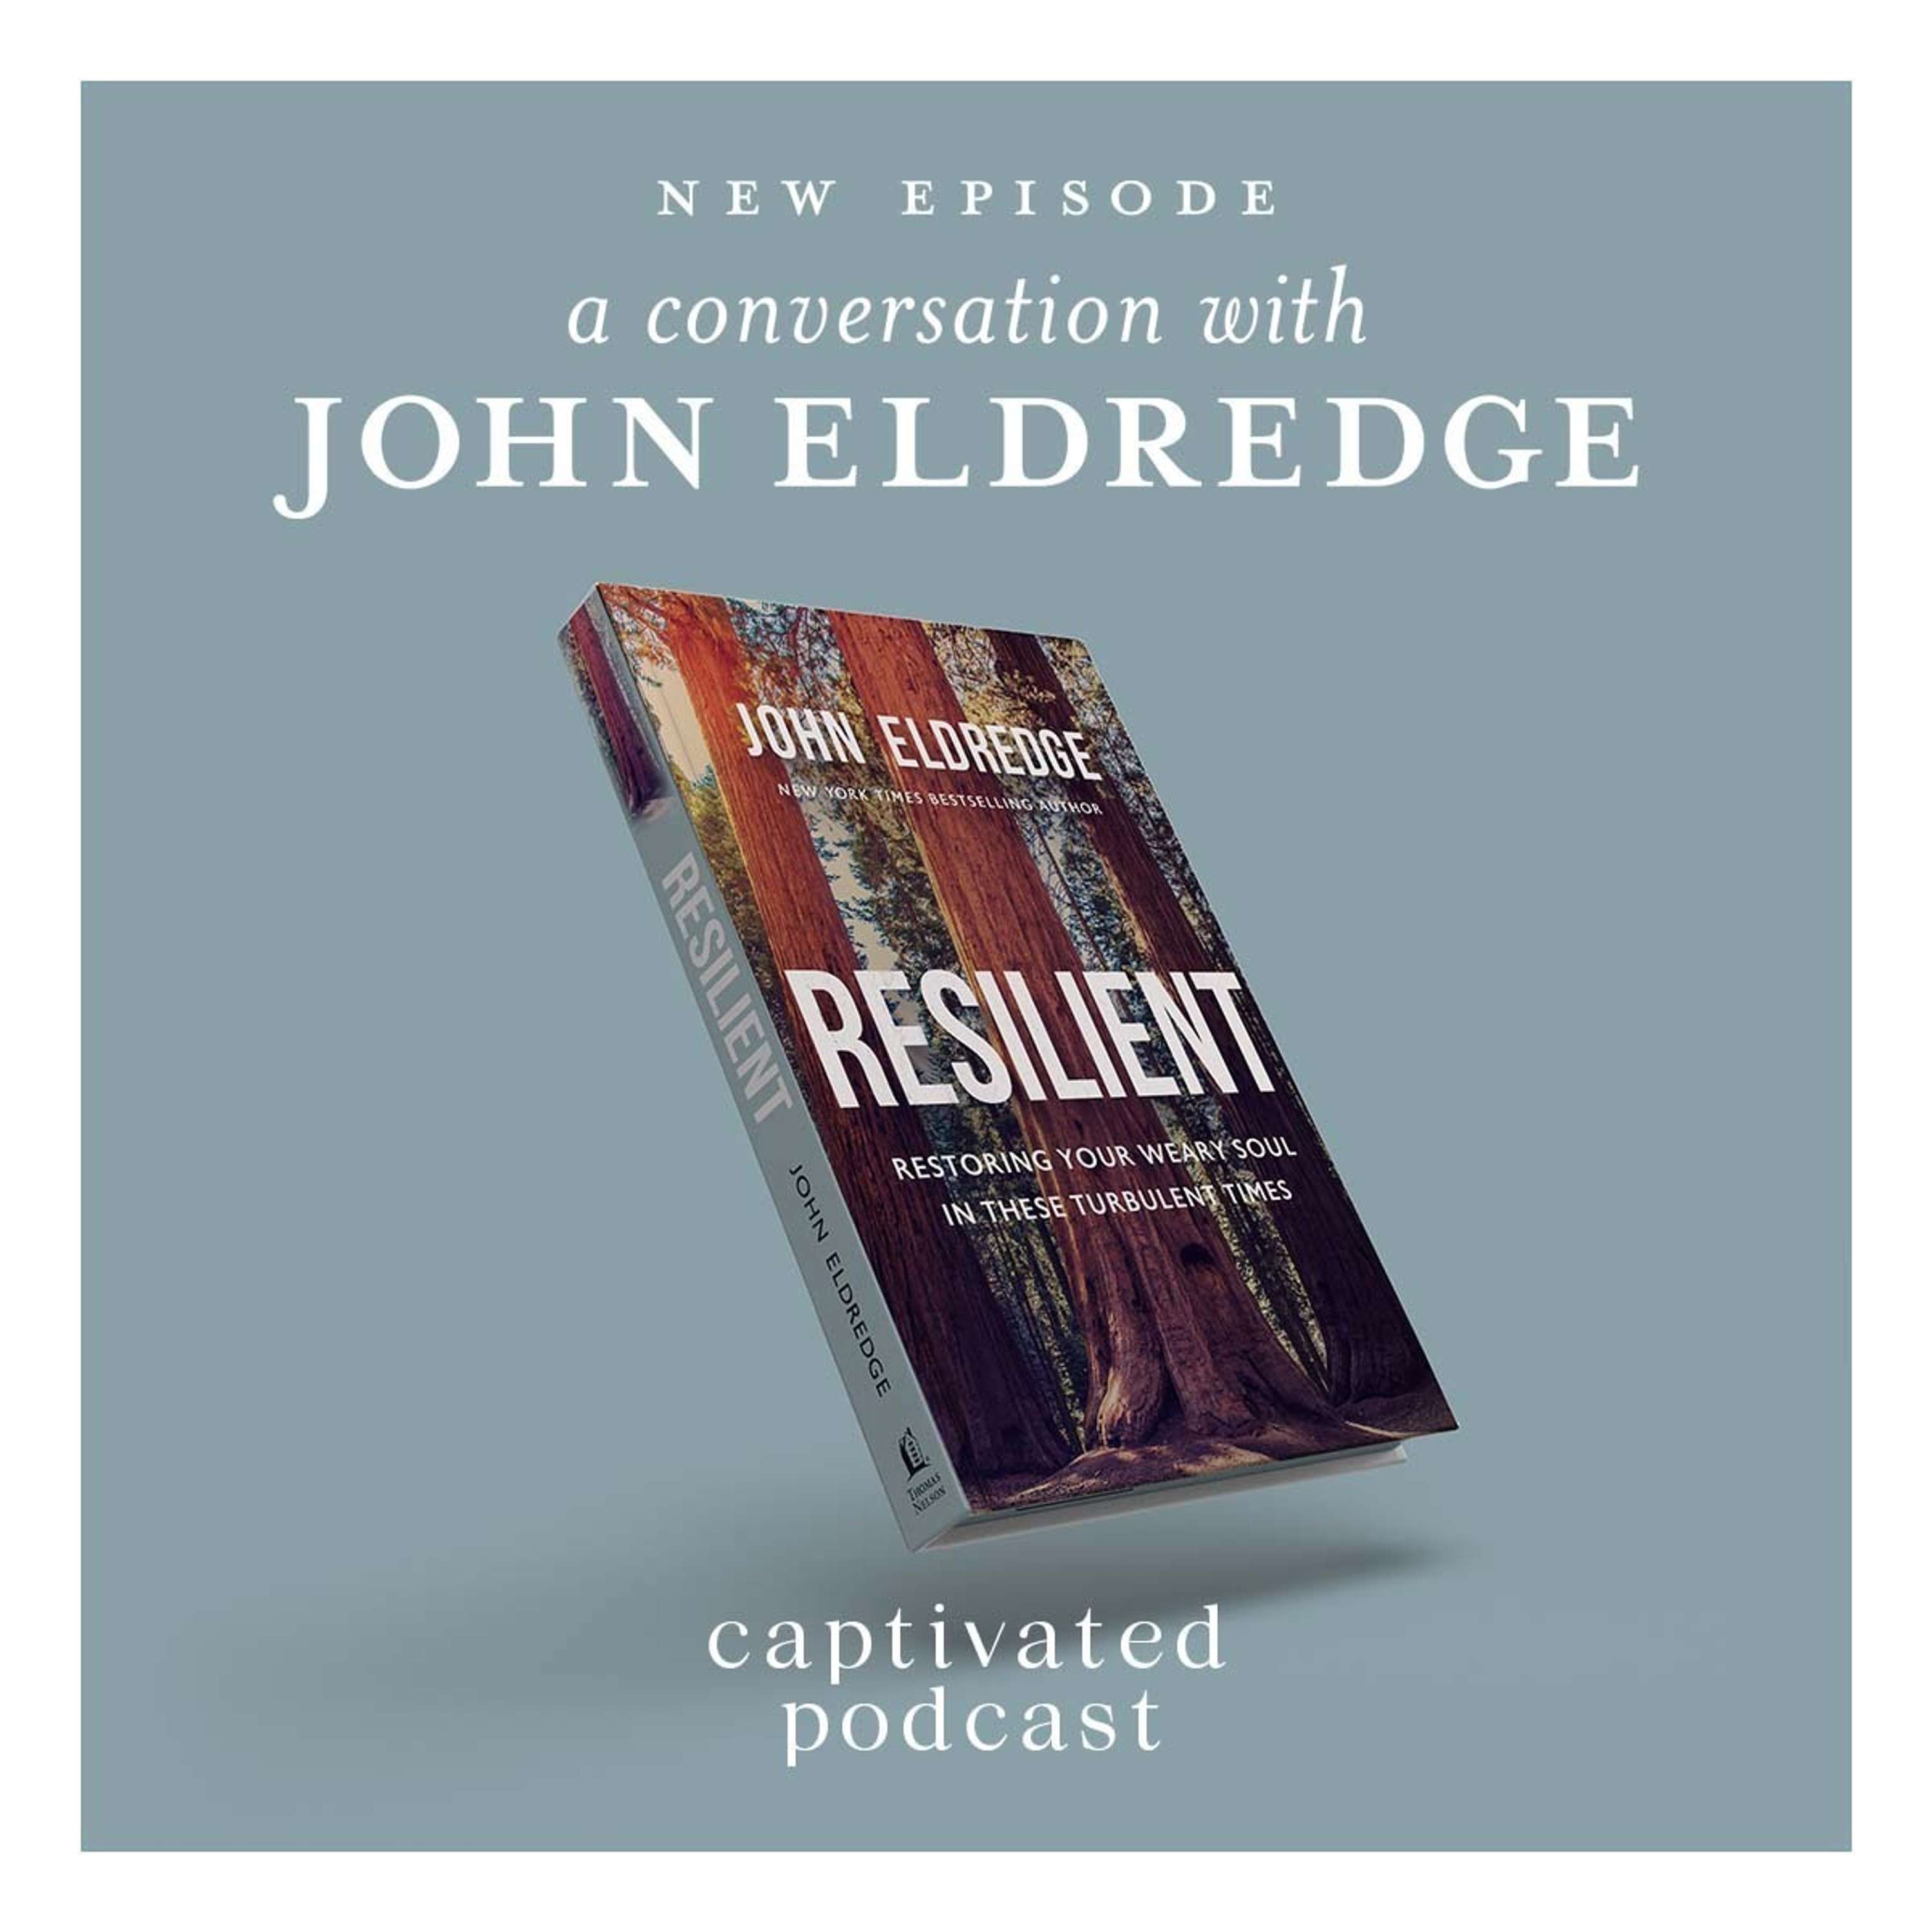 A Conversation with John Eldredge